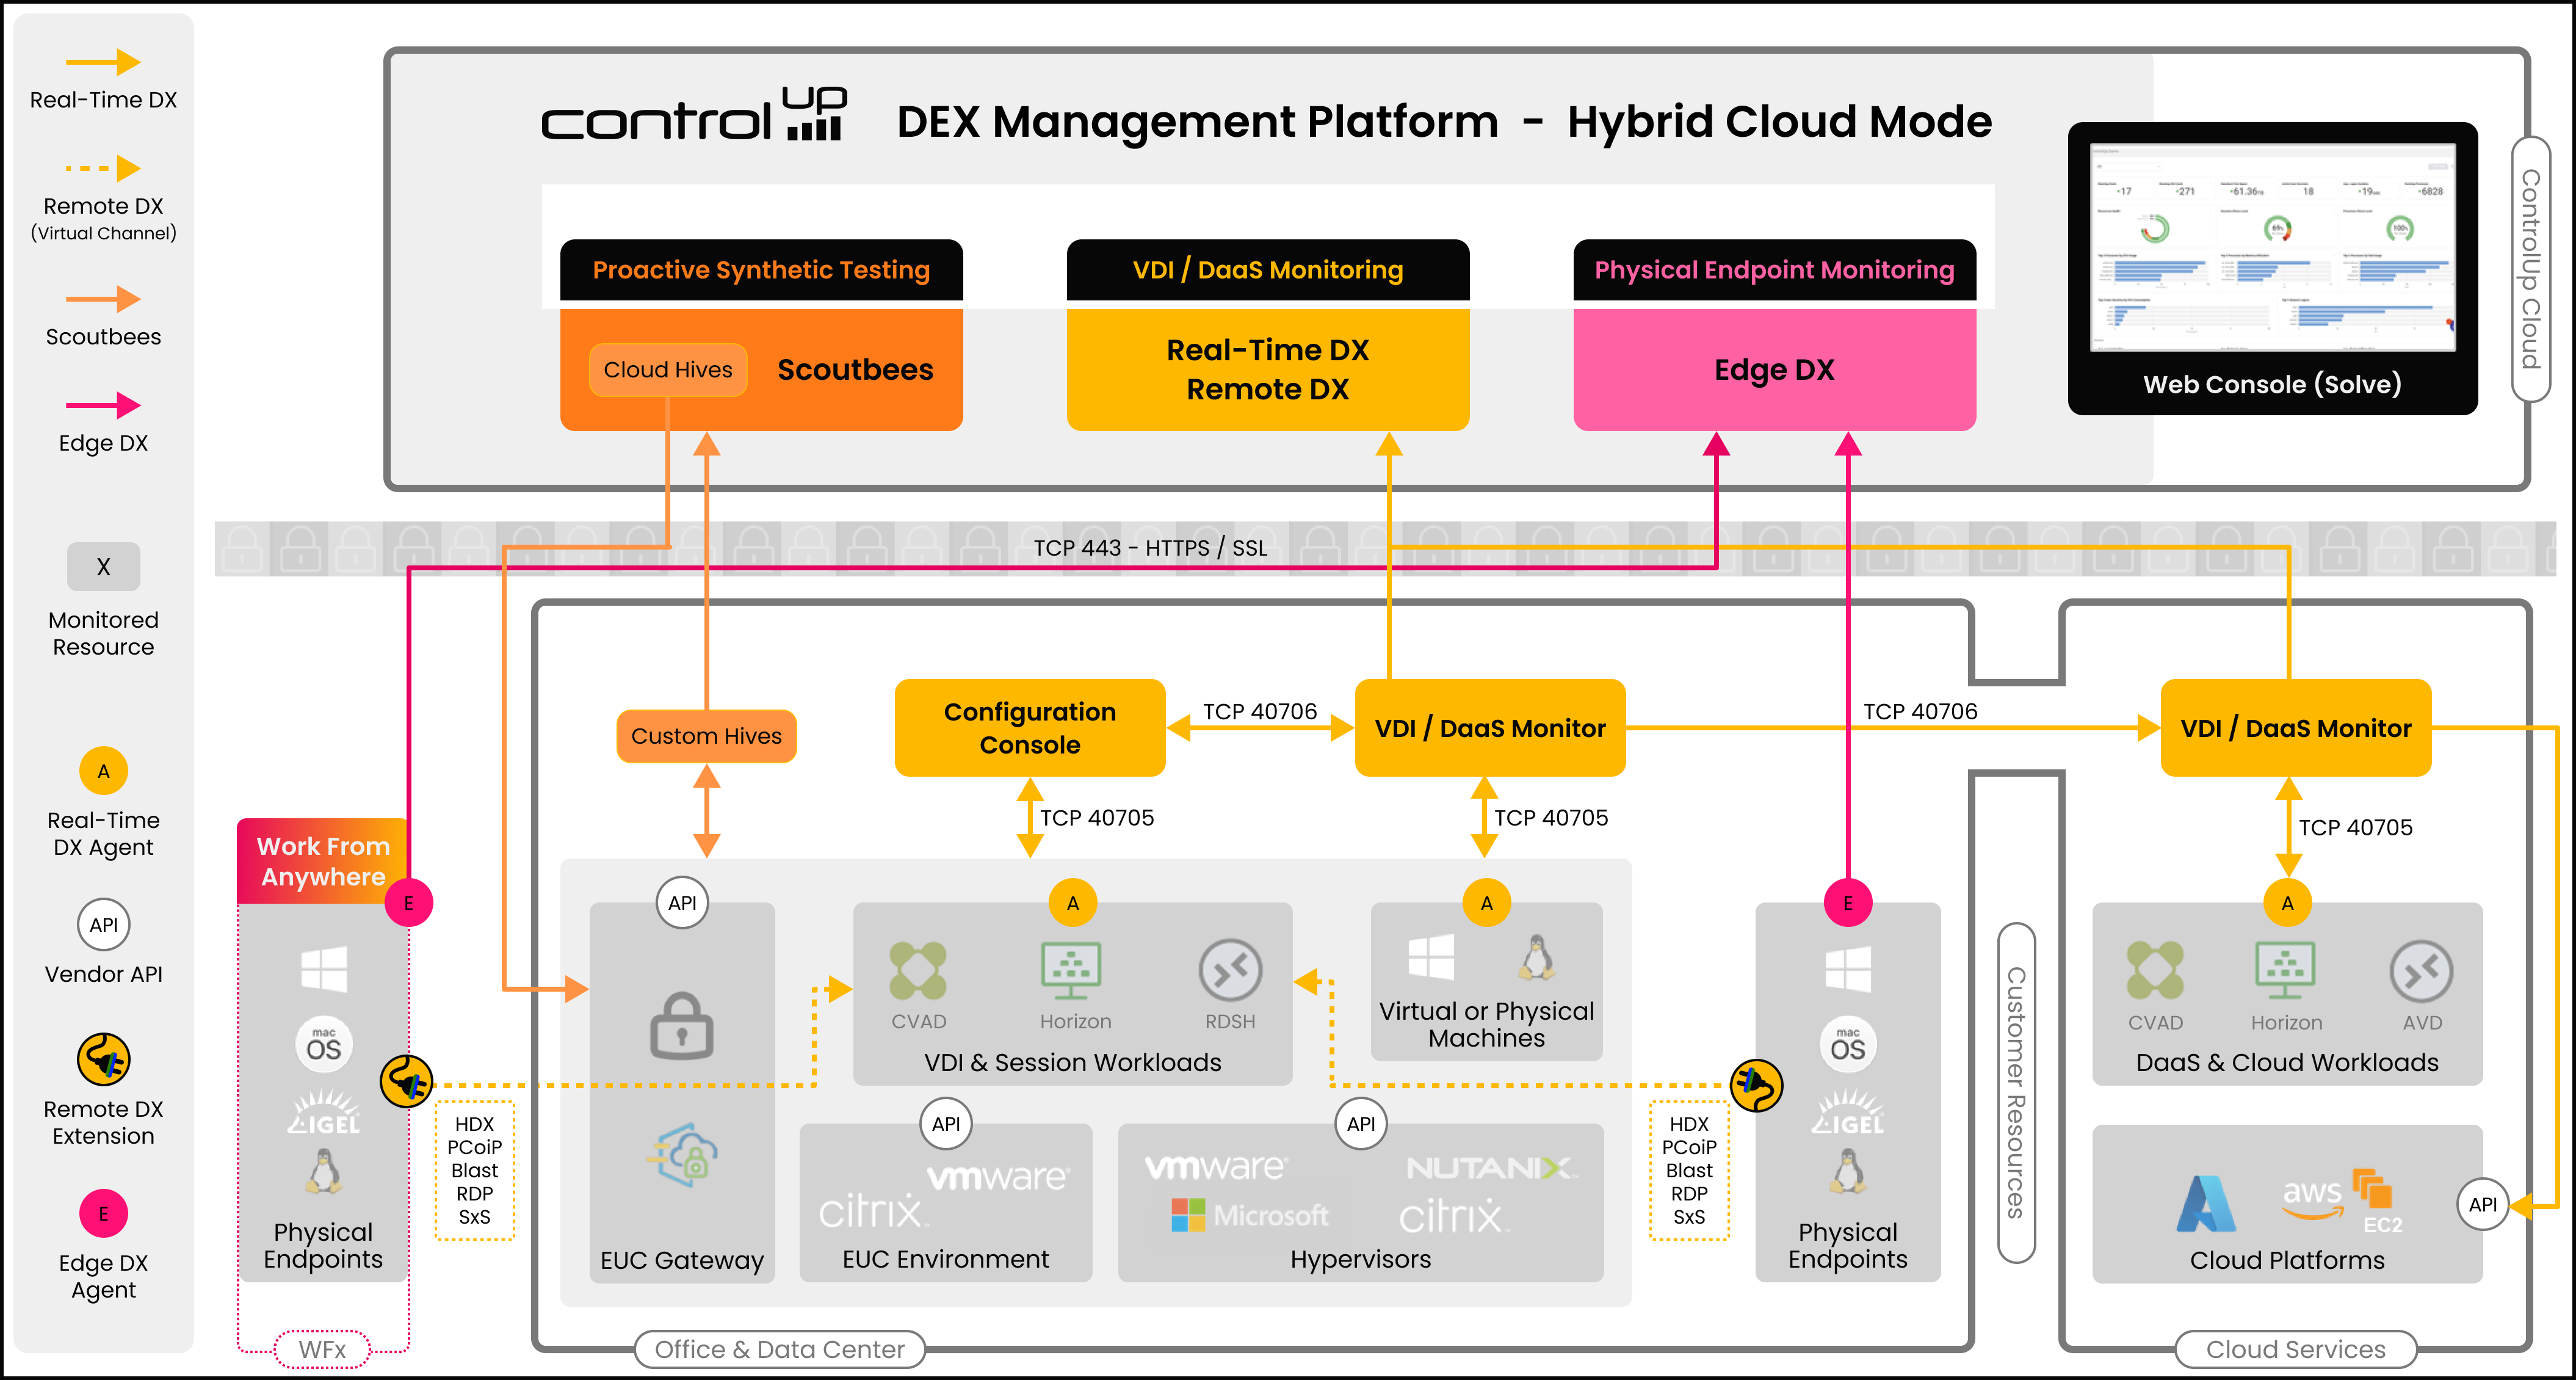 CU DEX Mgmt Platform - Hybrid Cloud Mode(1)